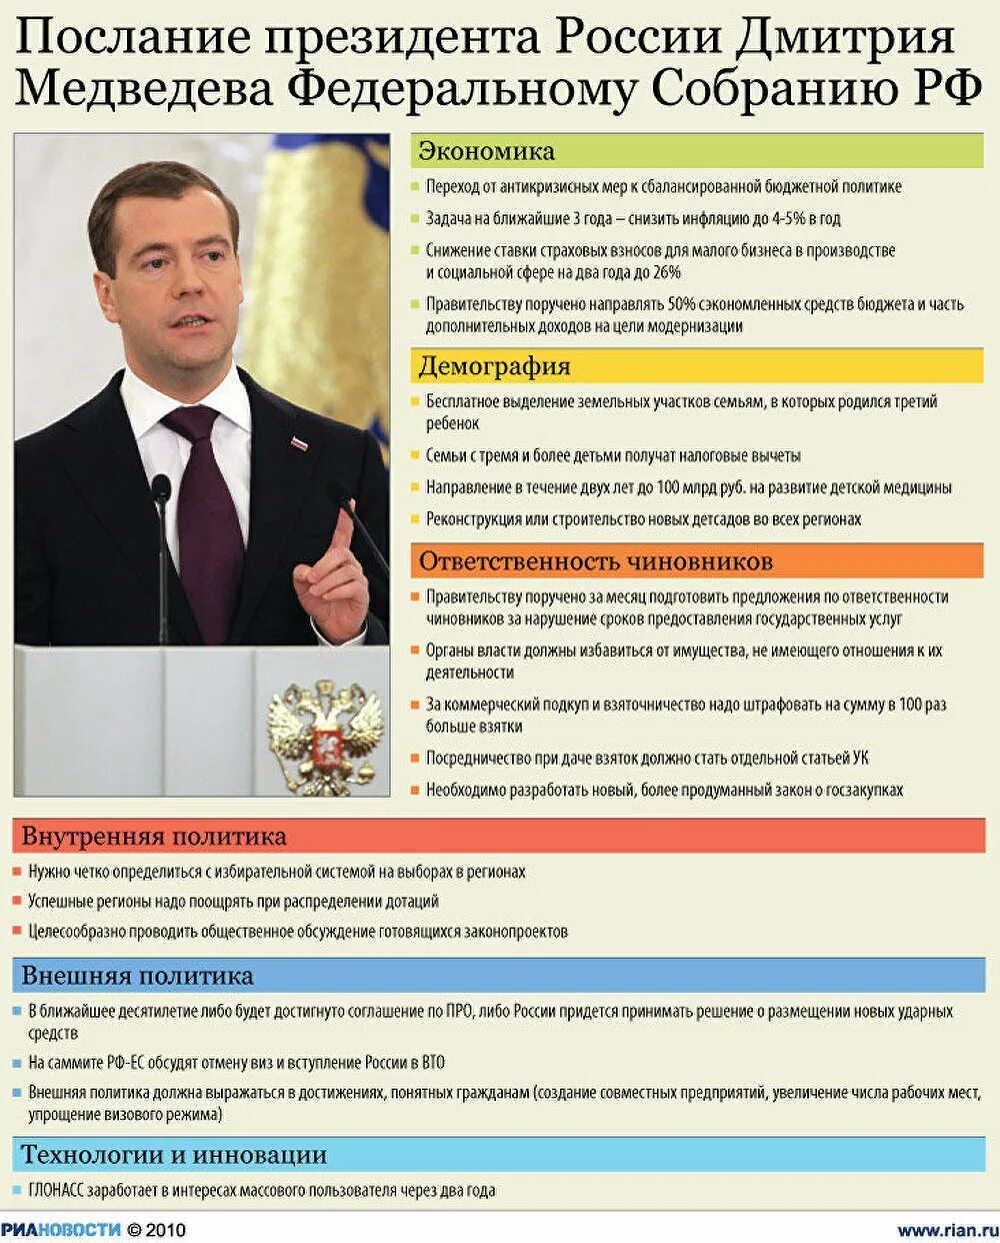 Период президентства медведева. Правление Медведева 2008-2012. Правление Медведева 2008-2012 внутренняя и внешняя политика. Правление Медведева президентом. Итоги президентства Медведева 2008-2012 кратко.